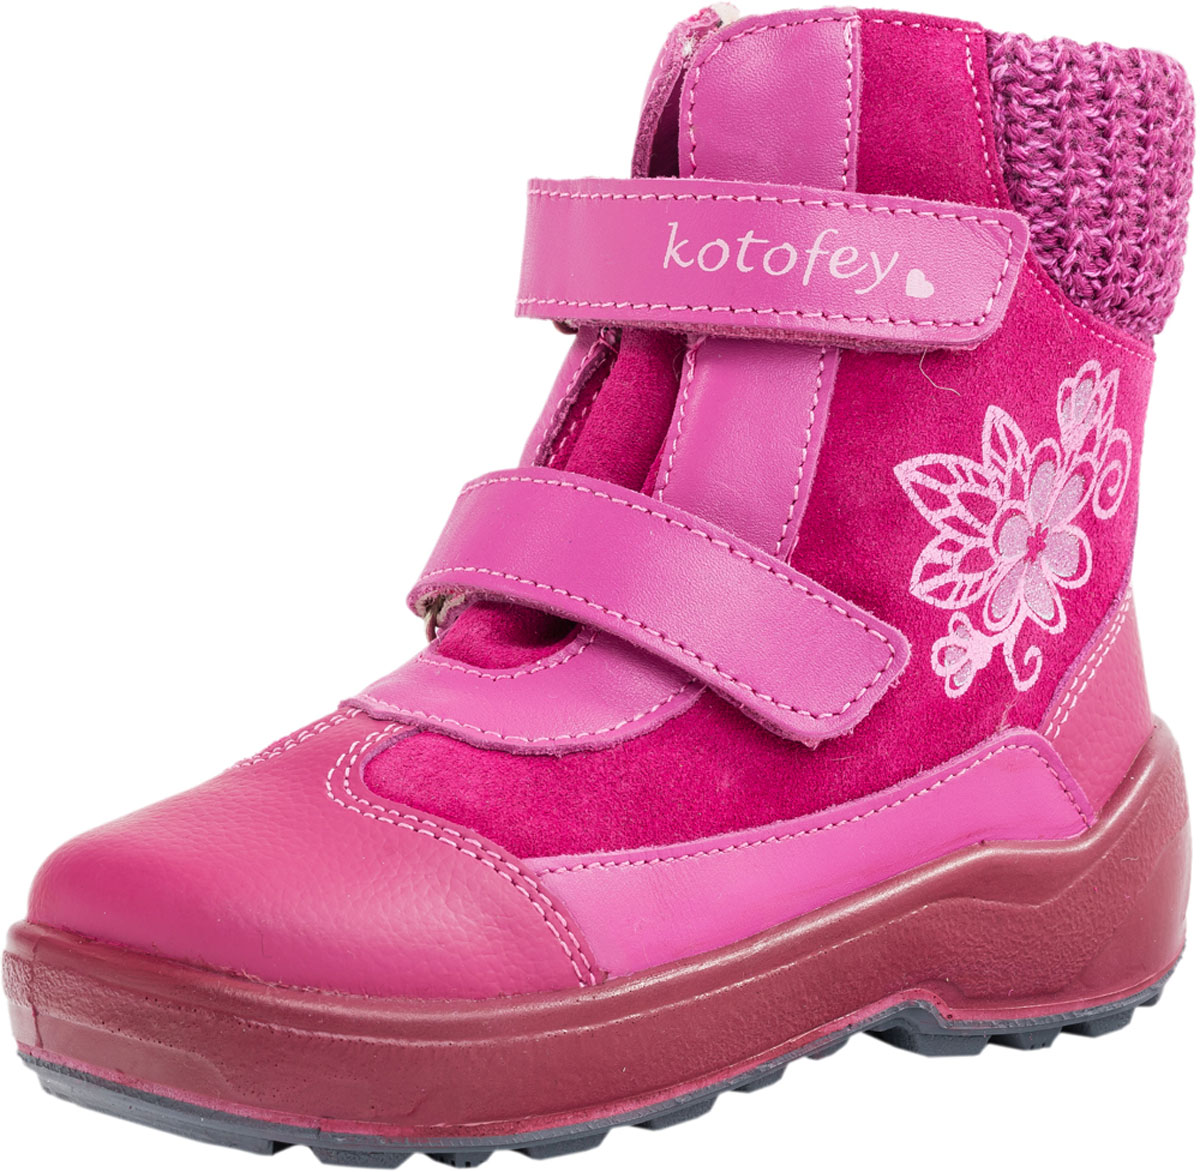 Ботинки для девочки Котофей, цвет: фуксия. 452090-42. Размер 27